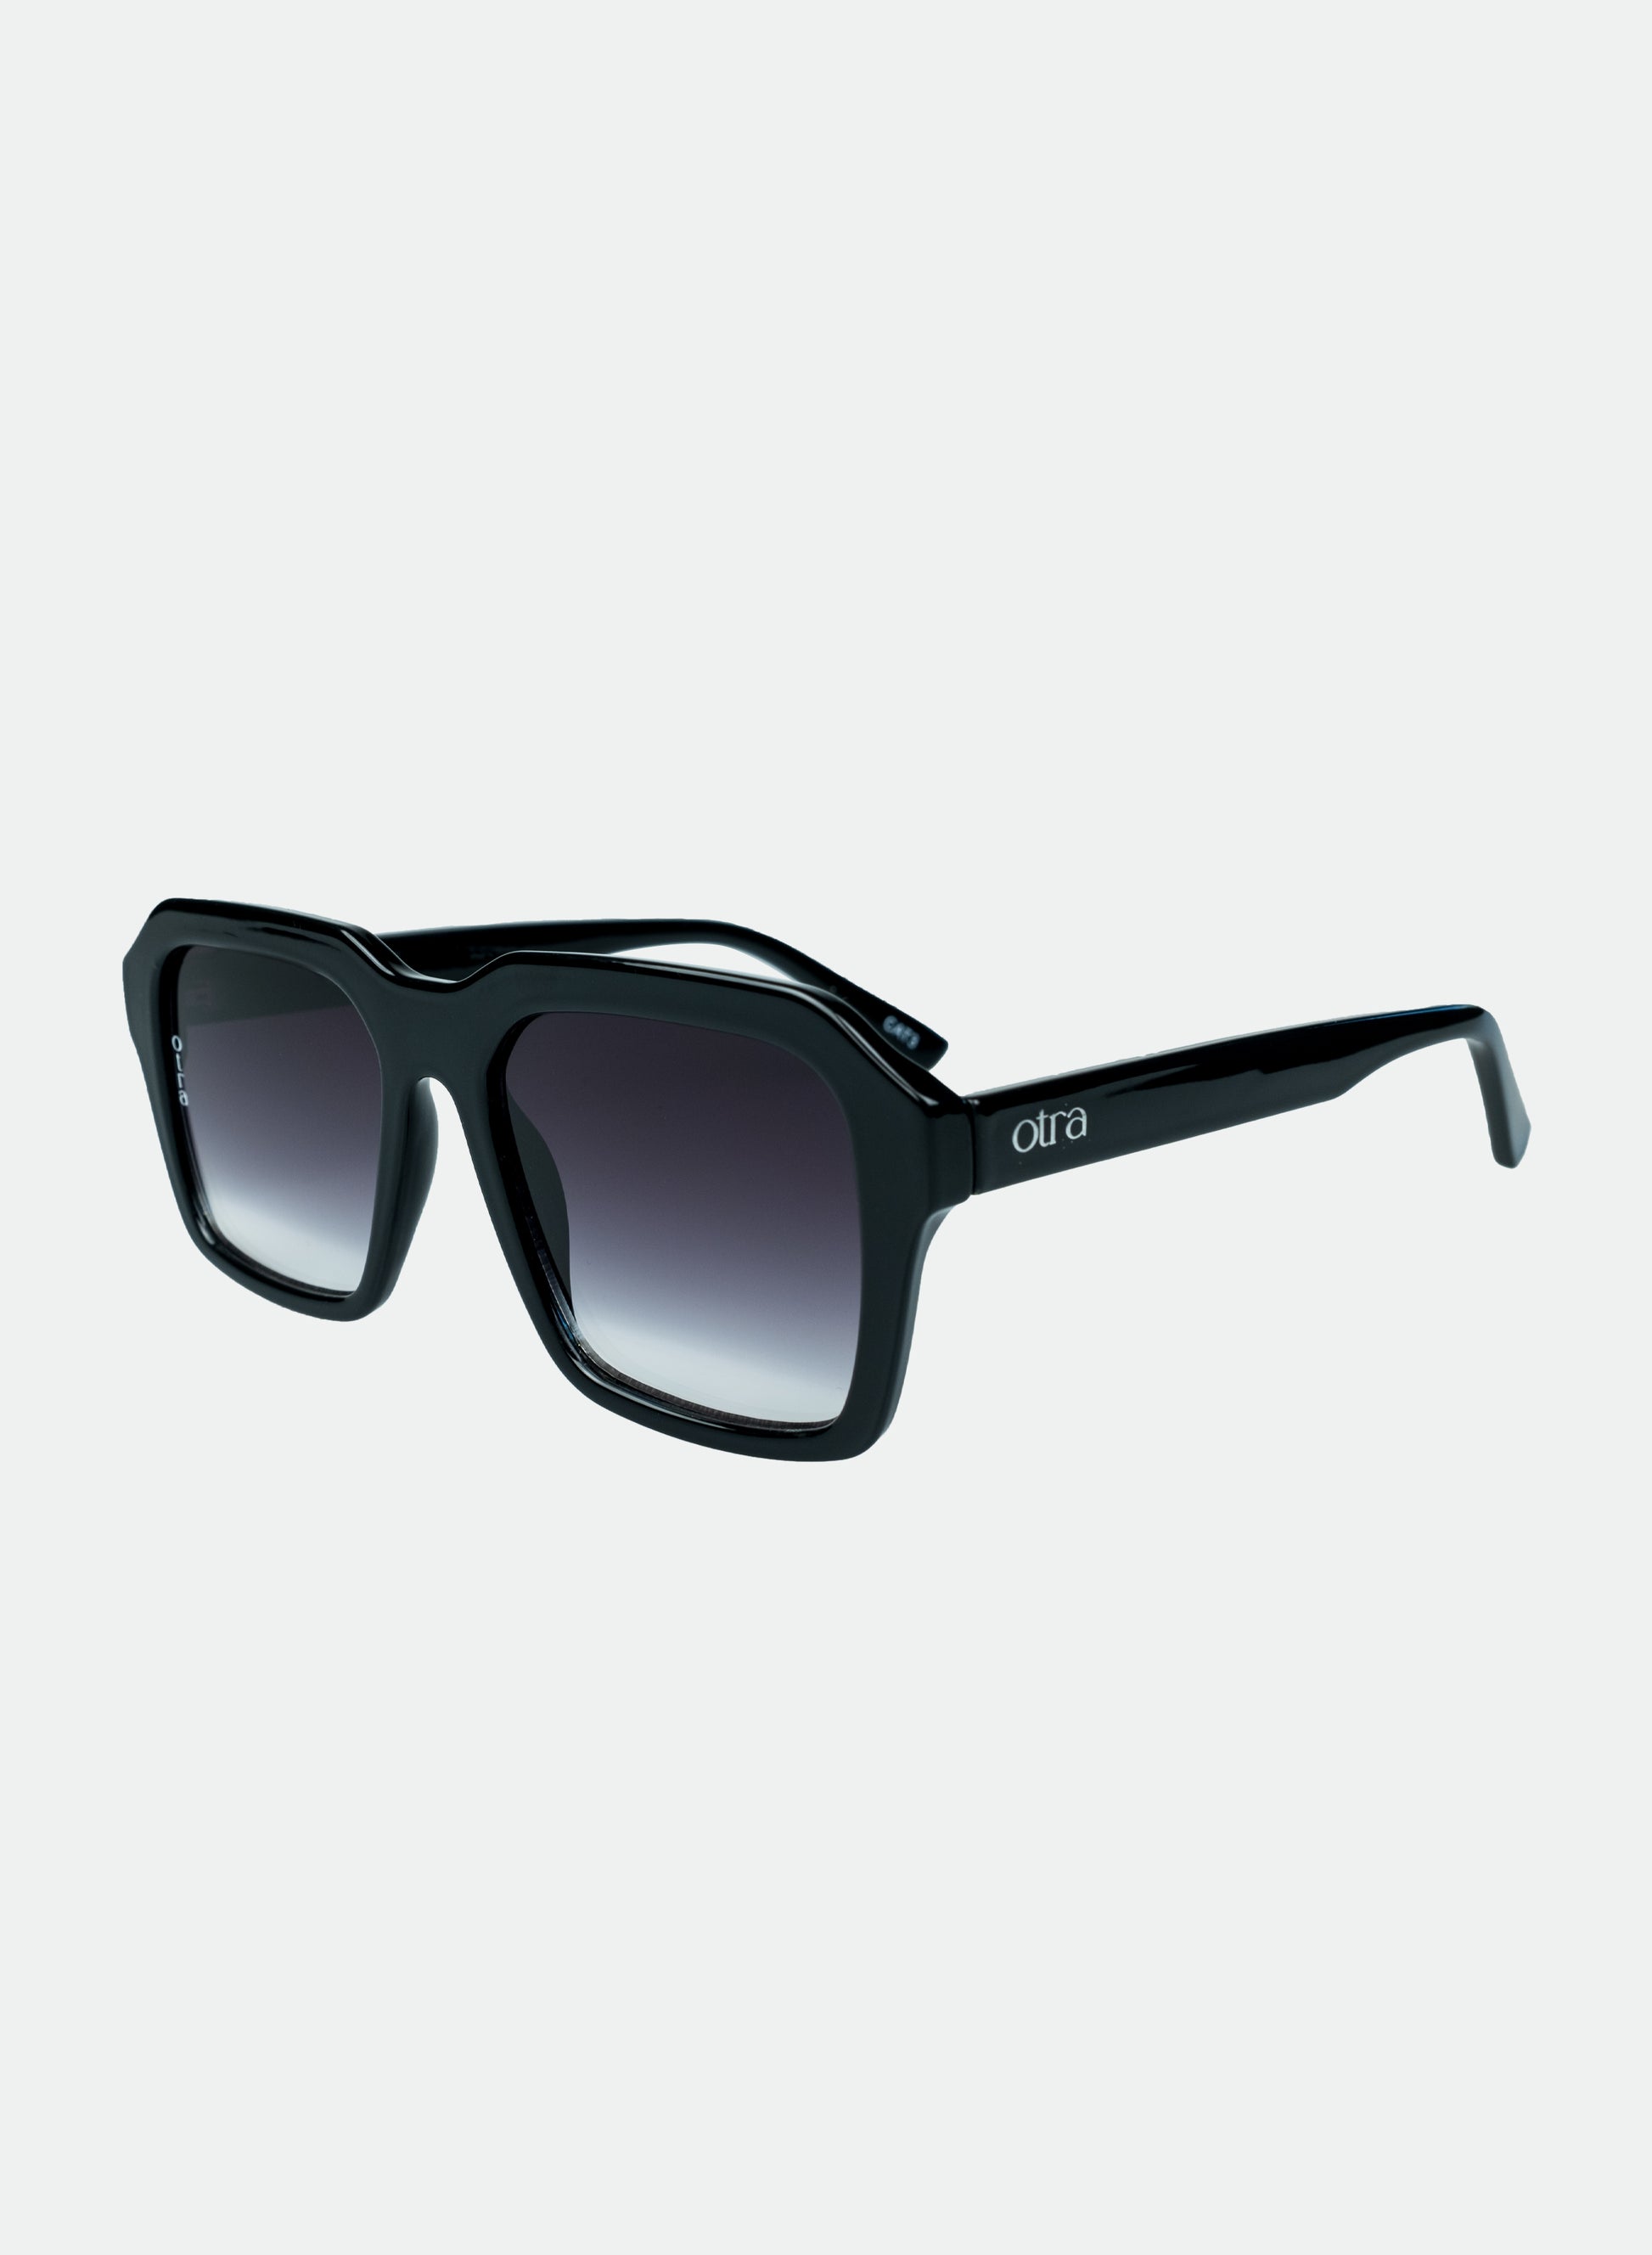 Lennox sunglasses in black side view